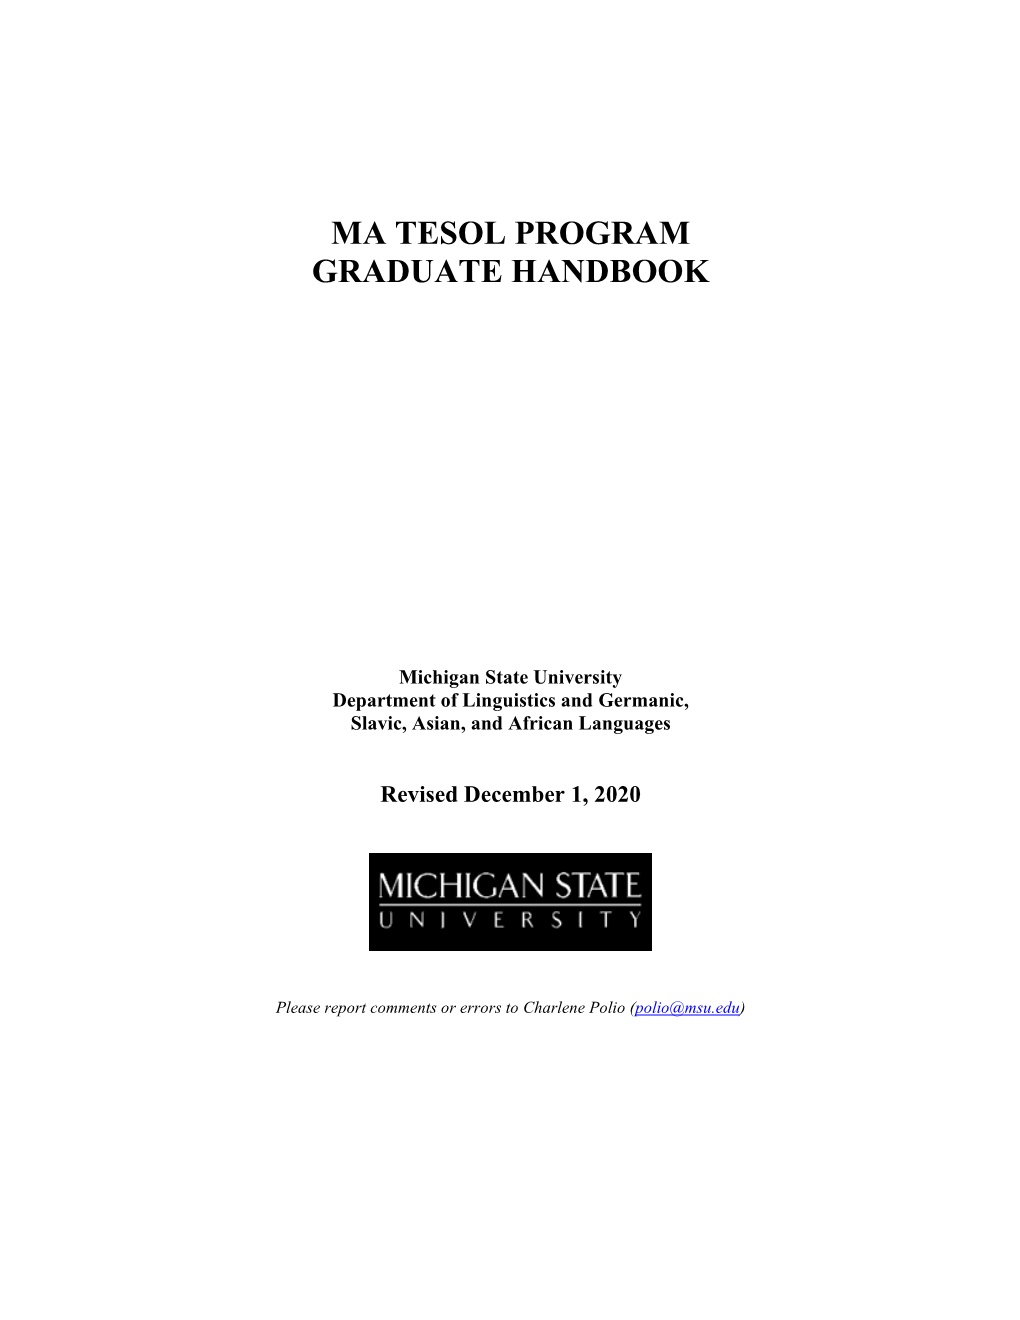 Ma Tesol Program Graduate Handbook